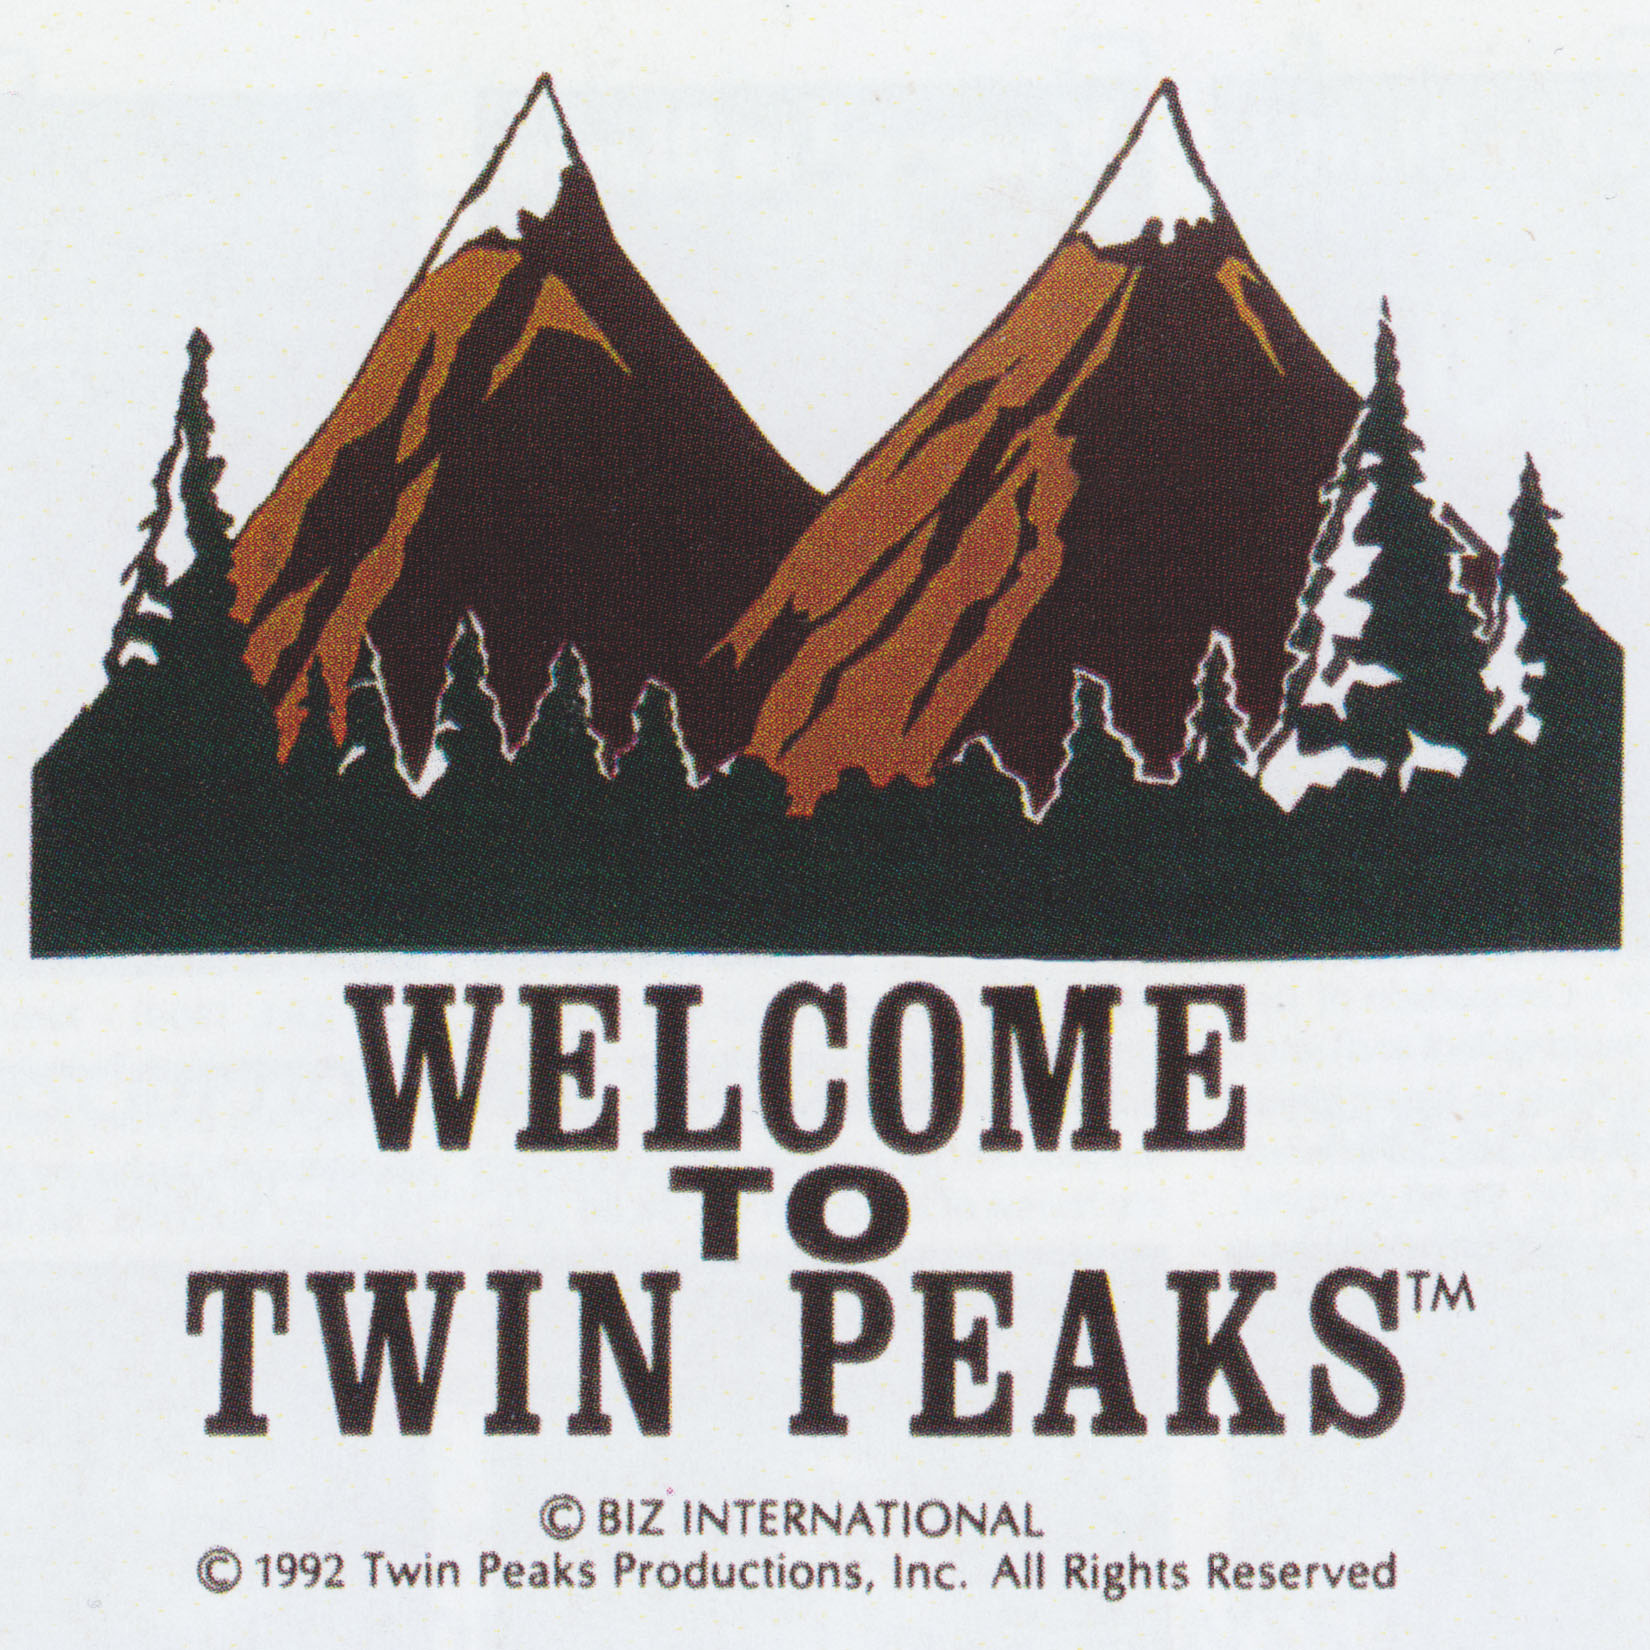 Art Peaks - Japanese Twin Peaks Stickers from 1992 - Twin Peaks Blog